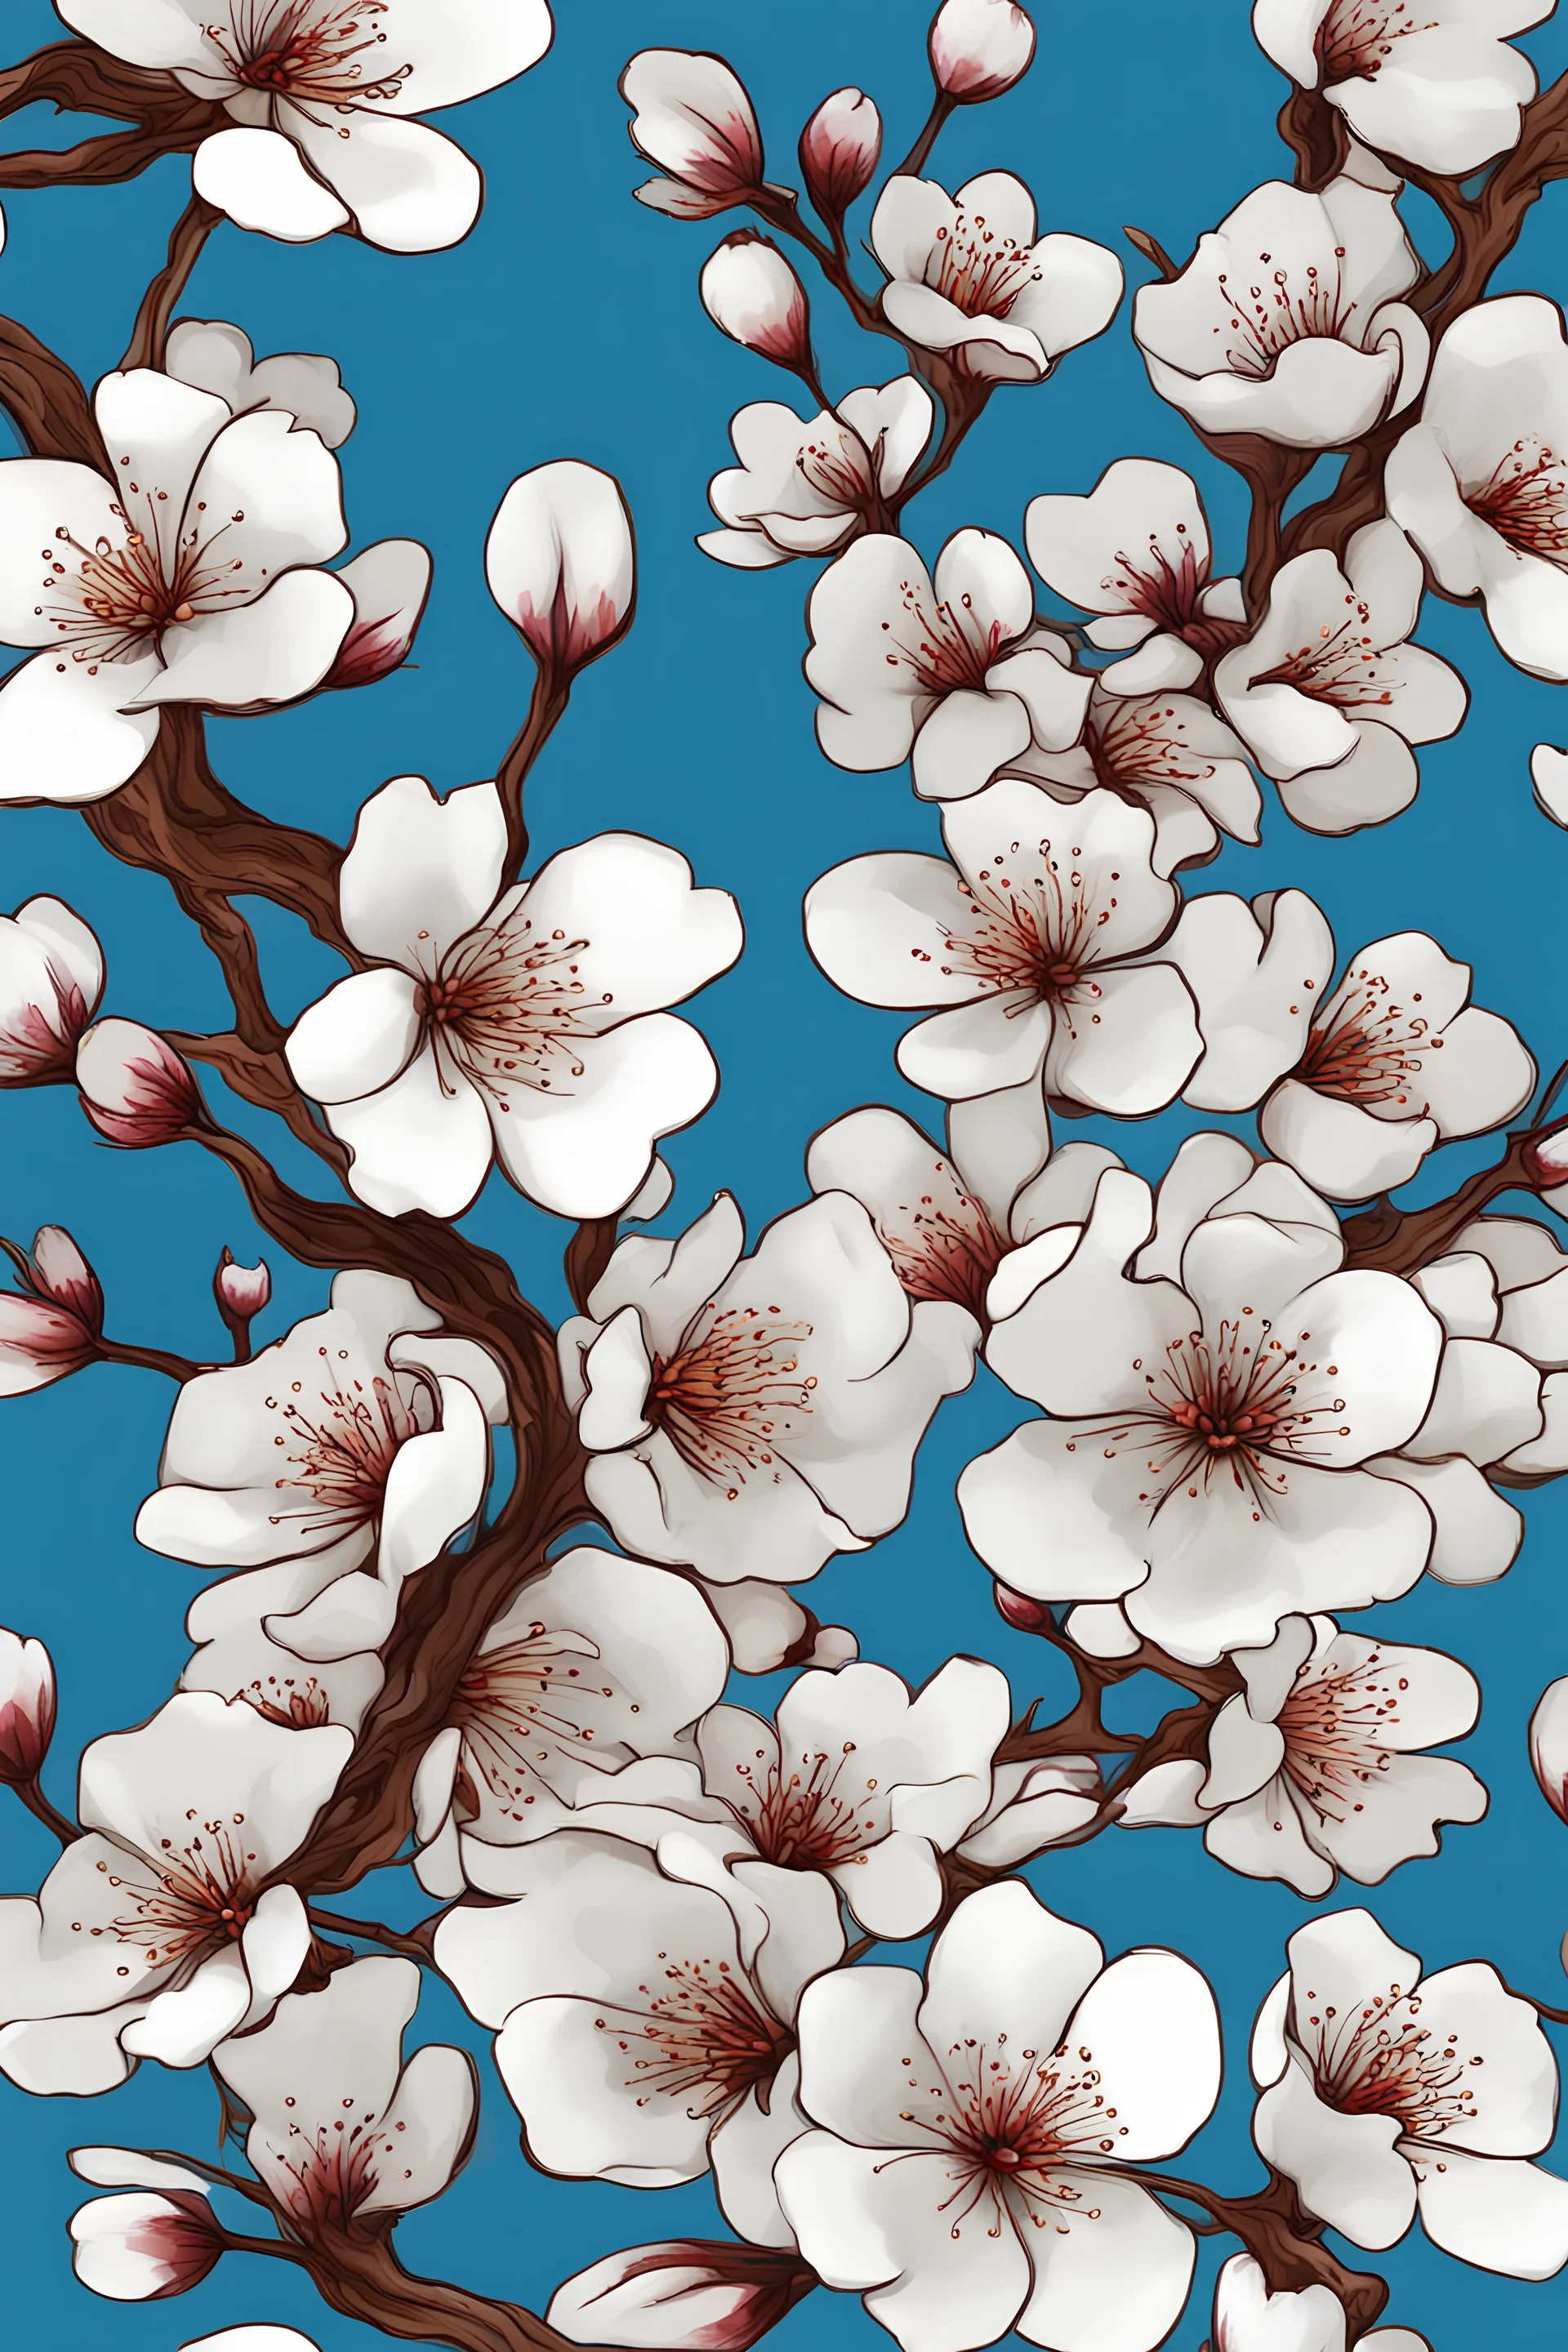 White cherry blossom digital art with blue background